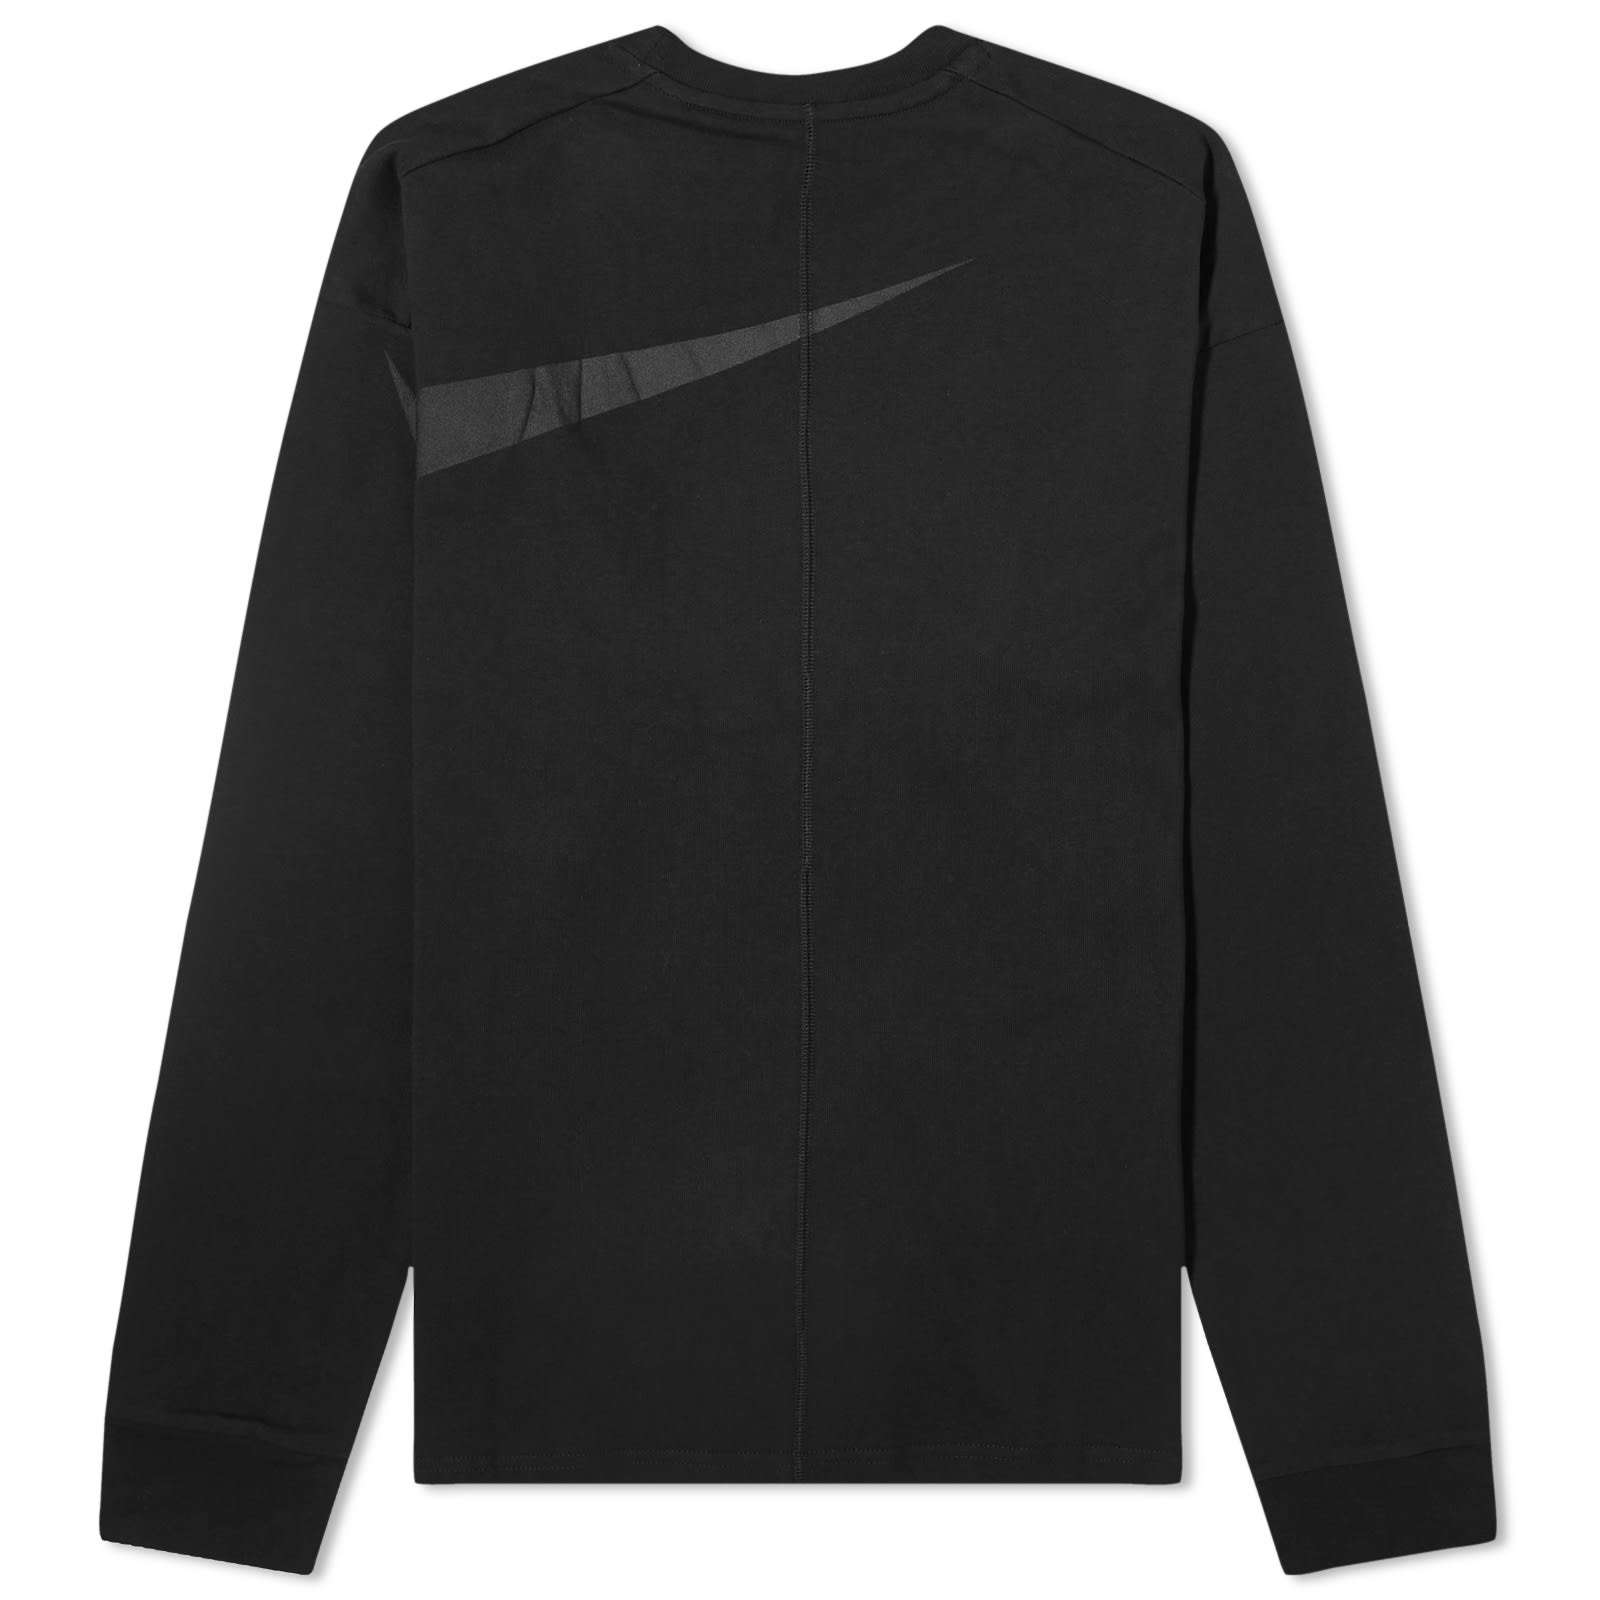 Nike ISPA Long Sleeve T-shirt - 2